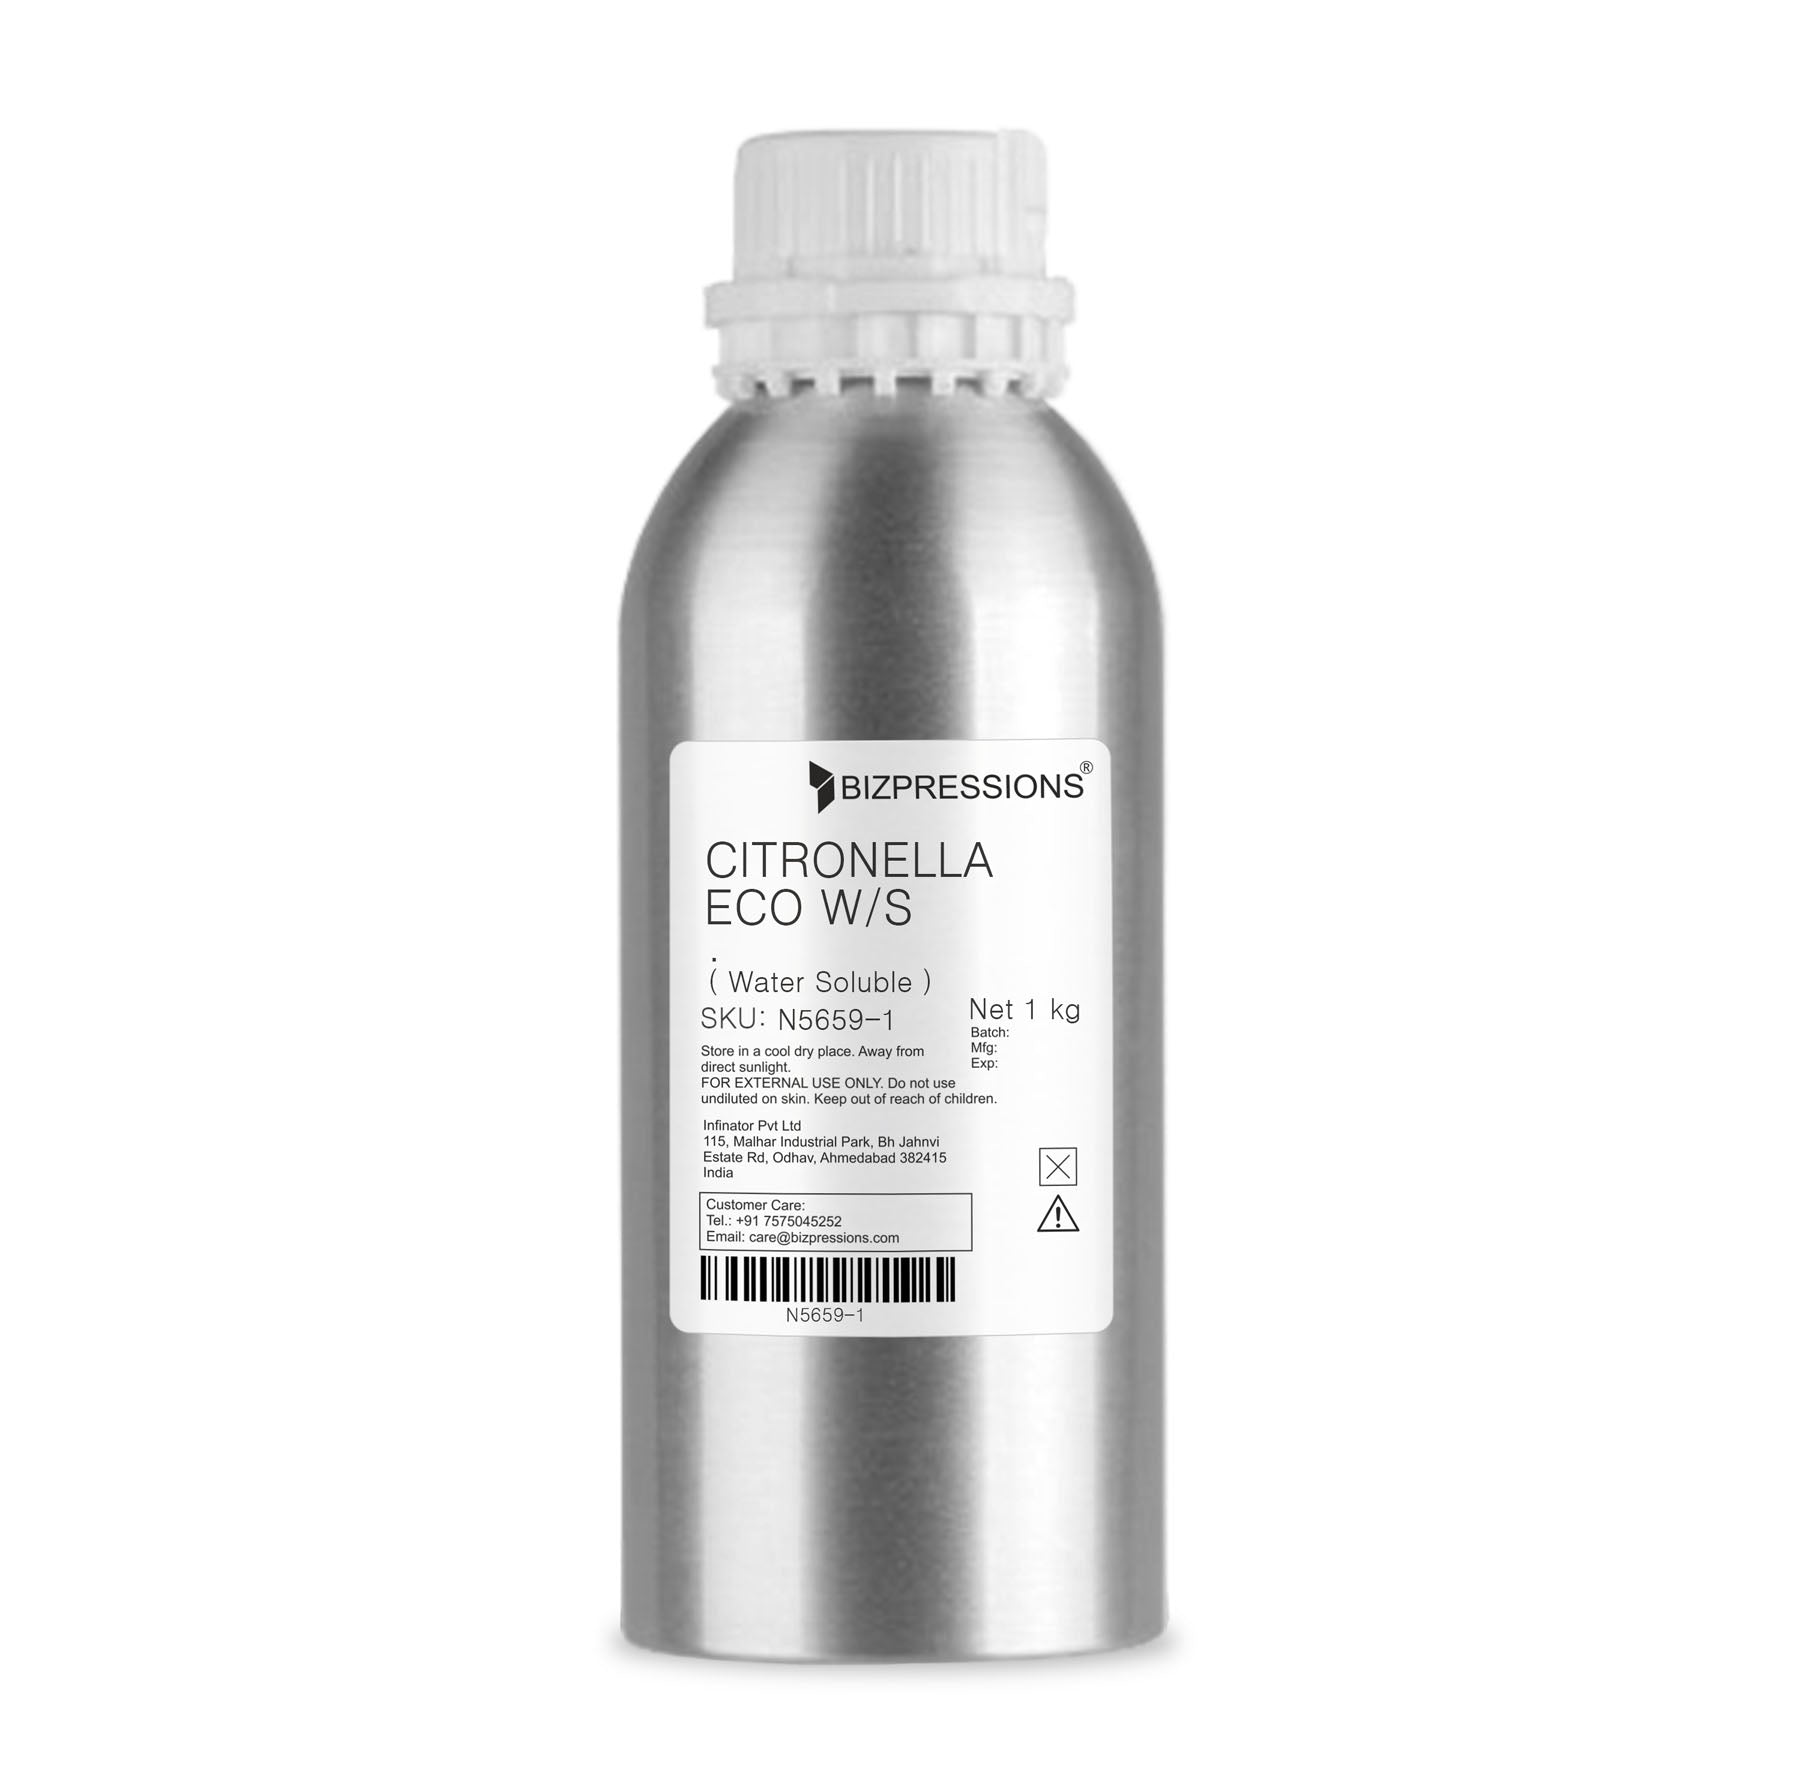 CITRONELLA ECO W/S - Fragrance ( Water Soluble ) - 1 kg